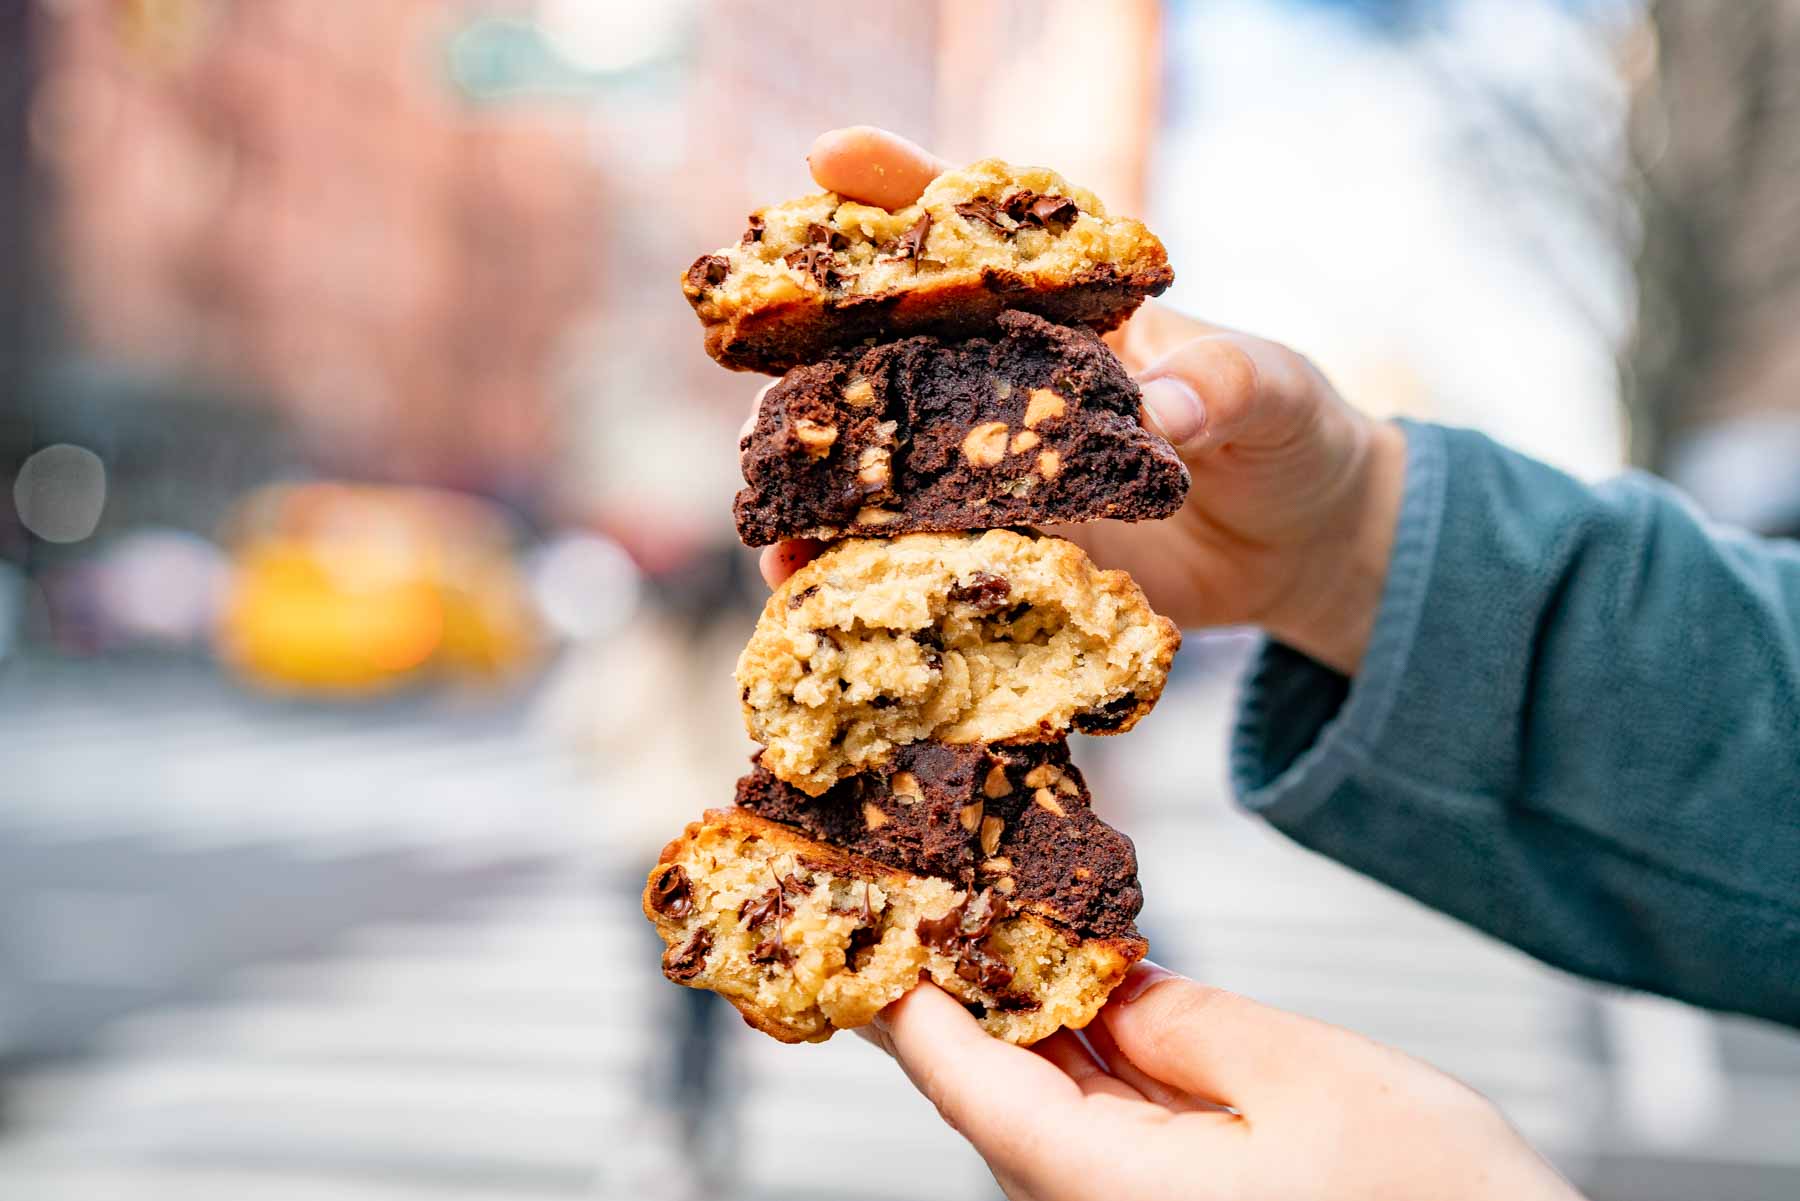 Best cookies NYC
best bakeries in Williamsburg